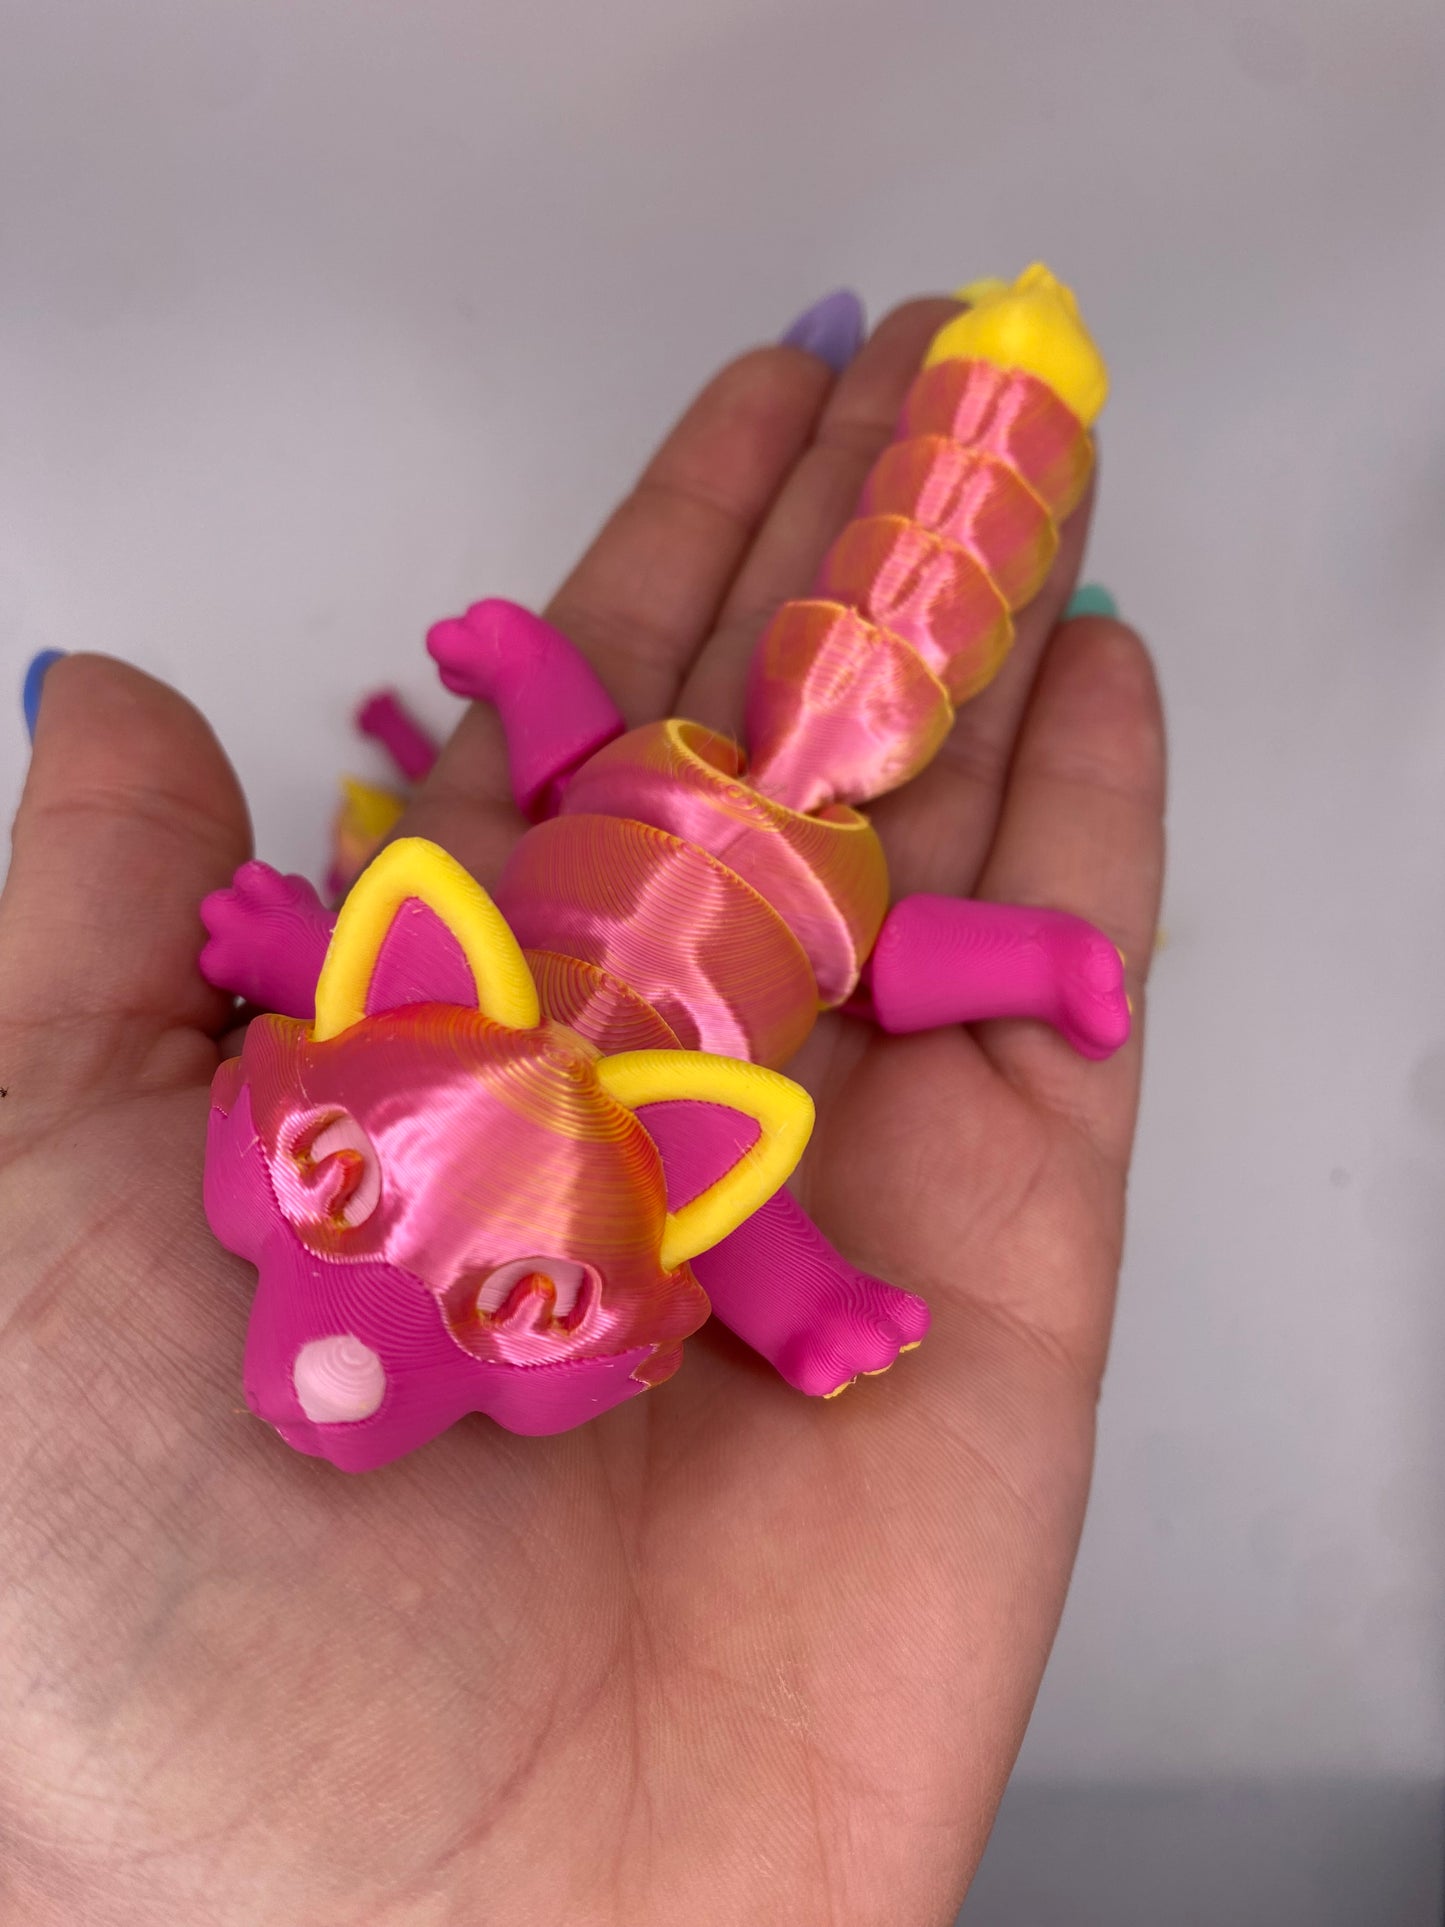 3D Cute Foxes (RTS) (Pink Lemonade)